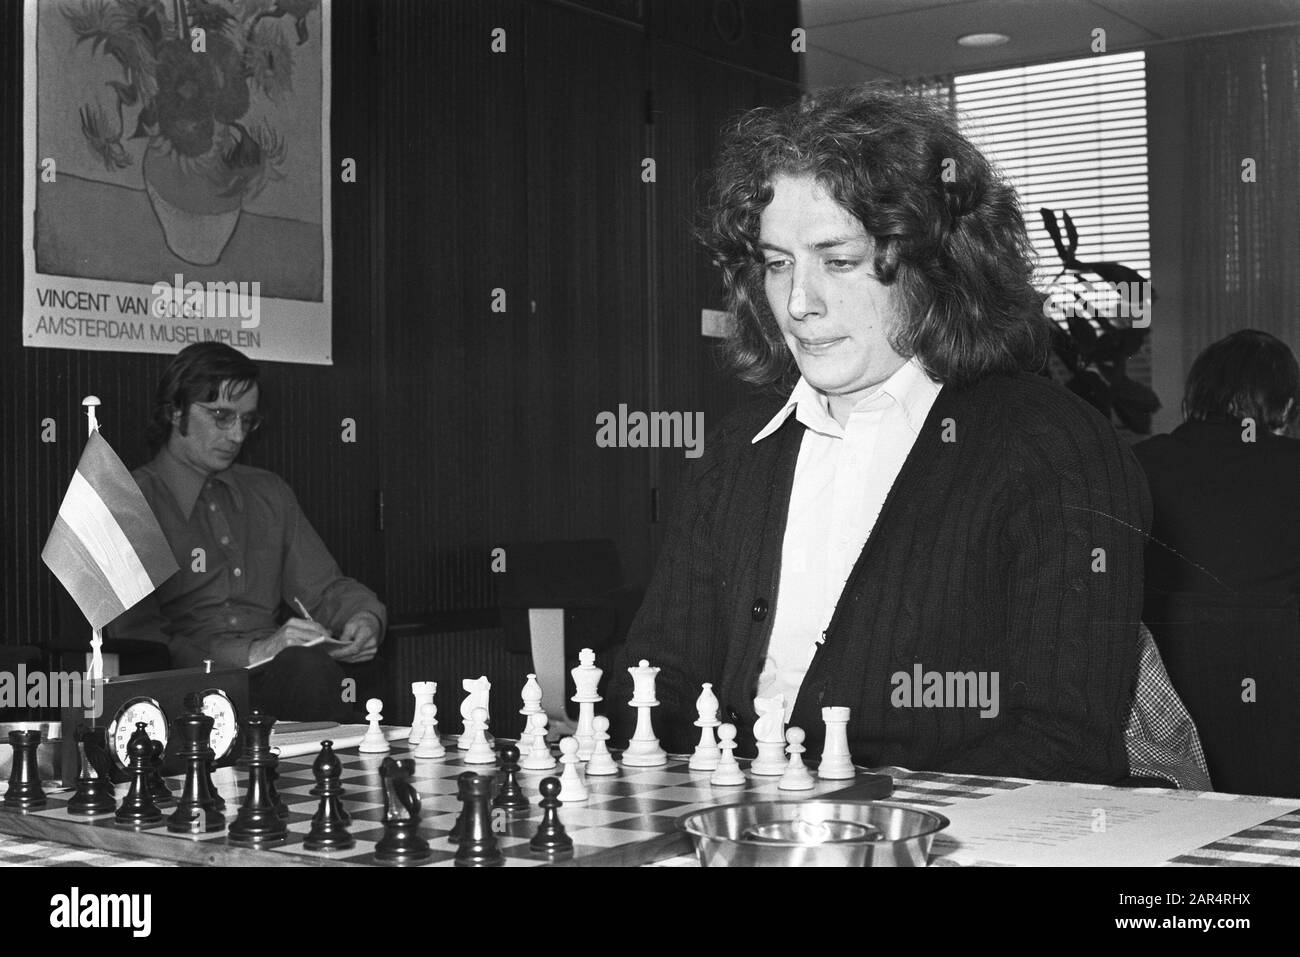 Jan Timman  Top Chess Players 